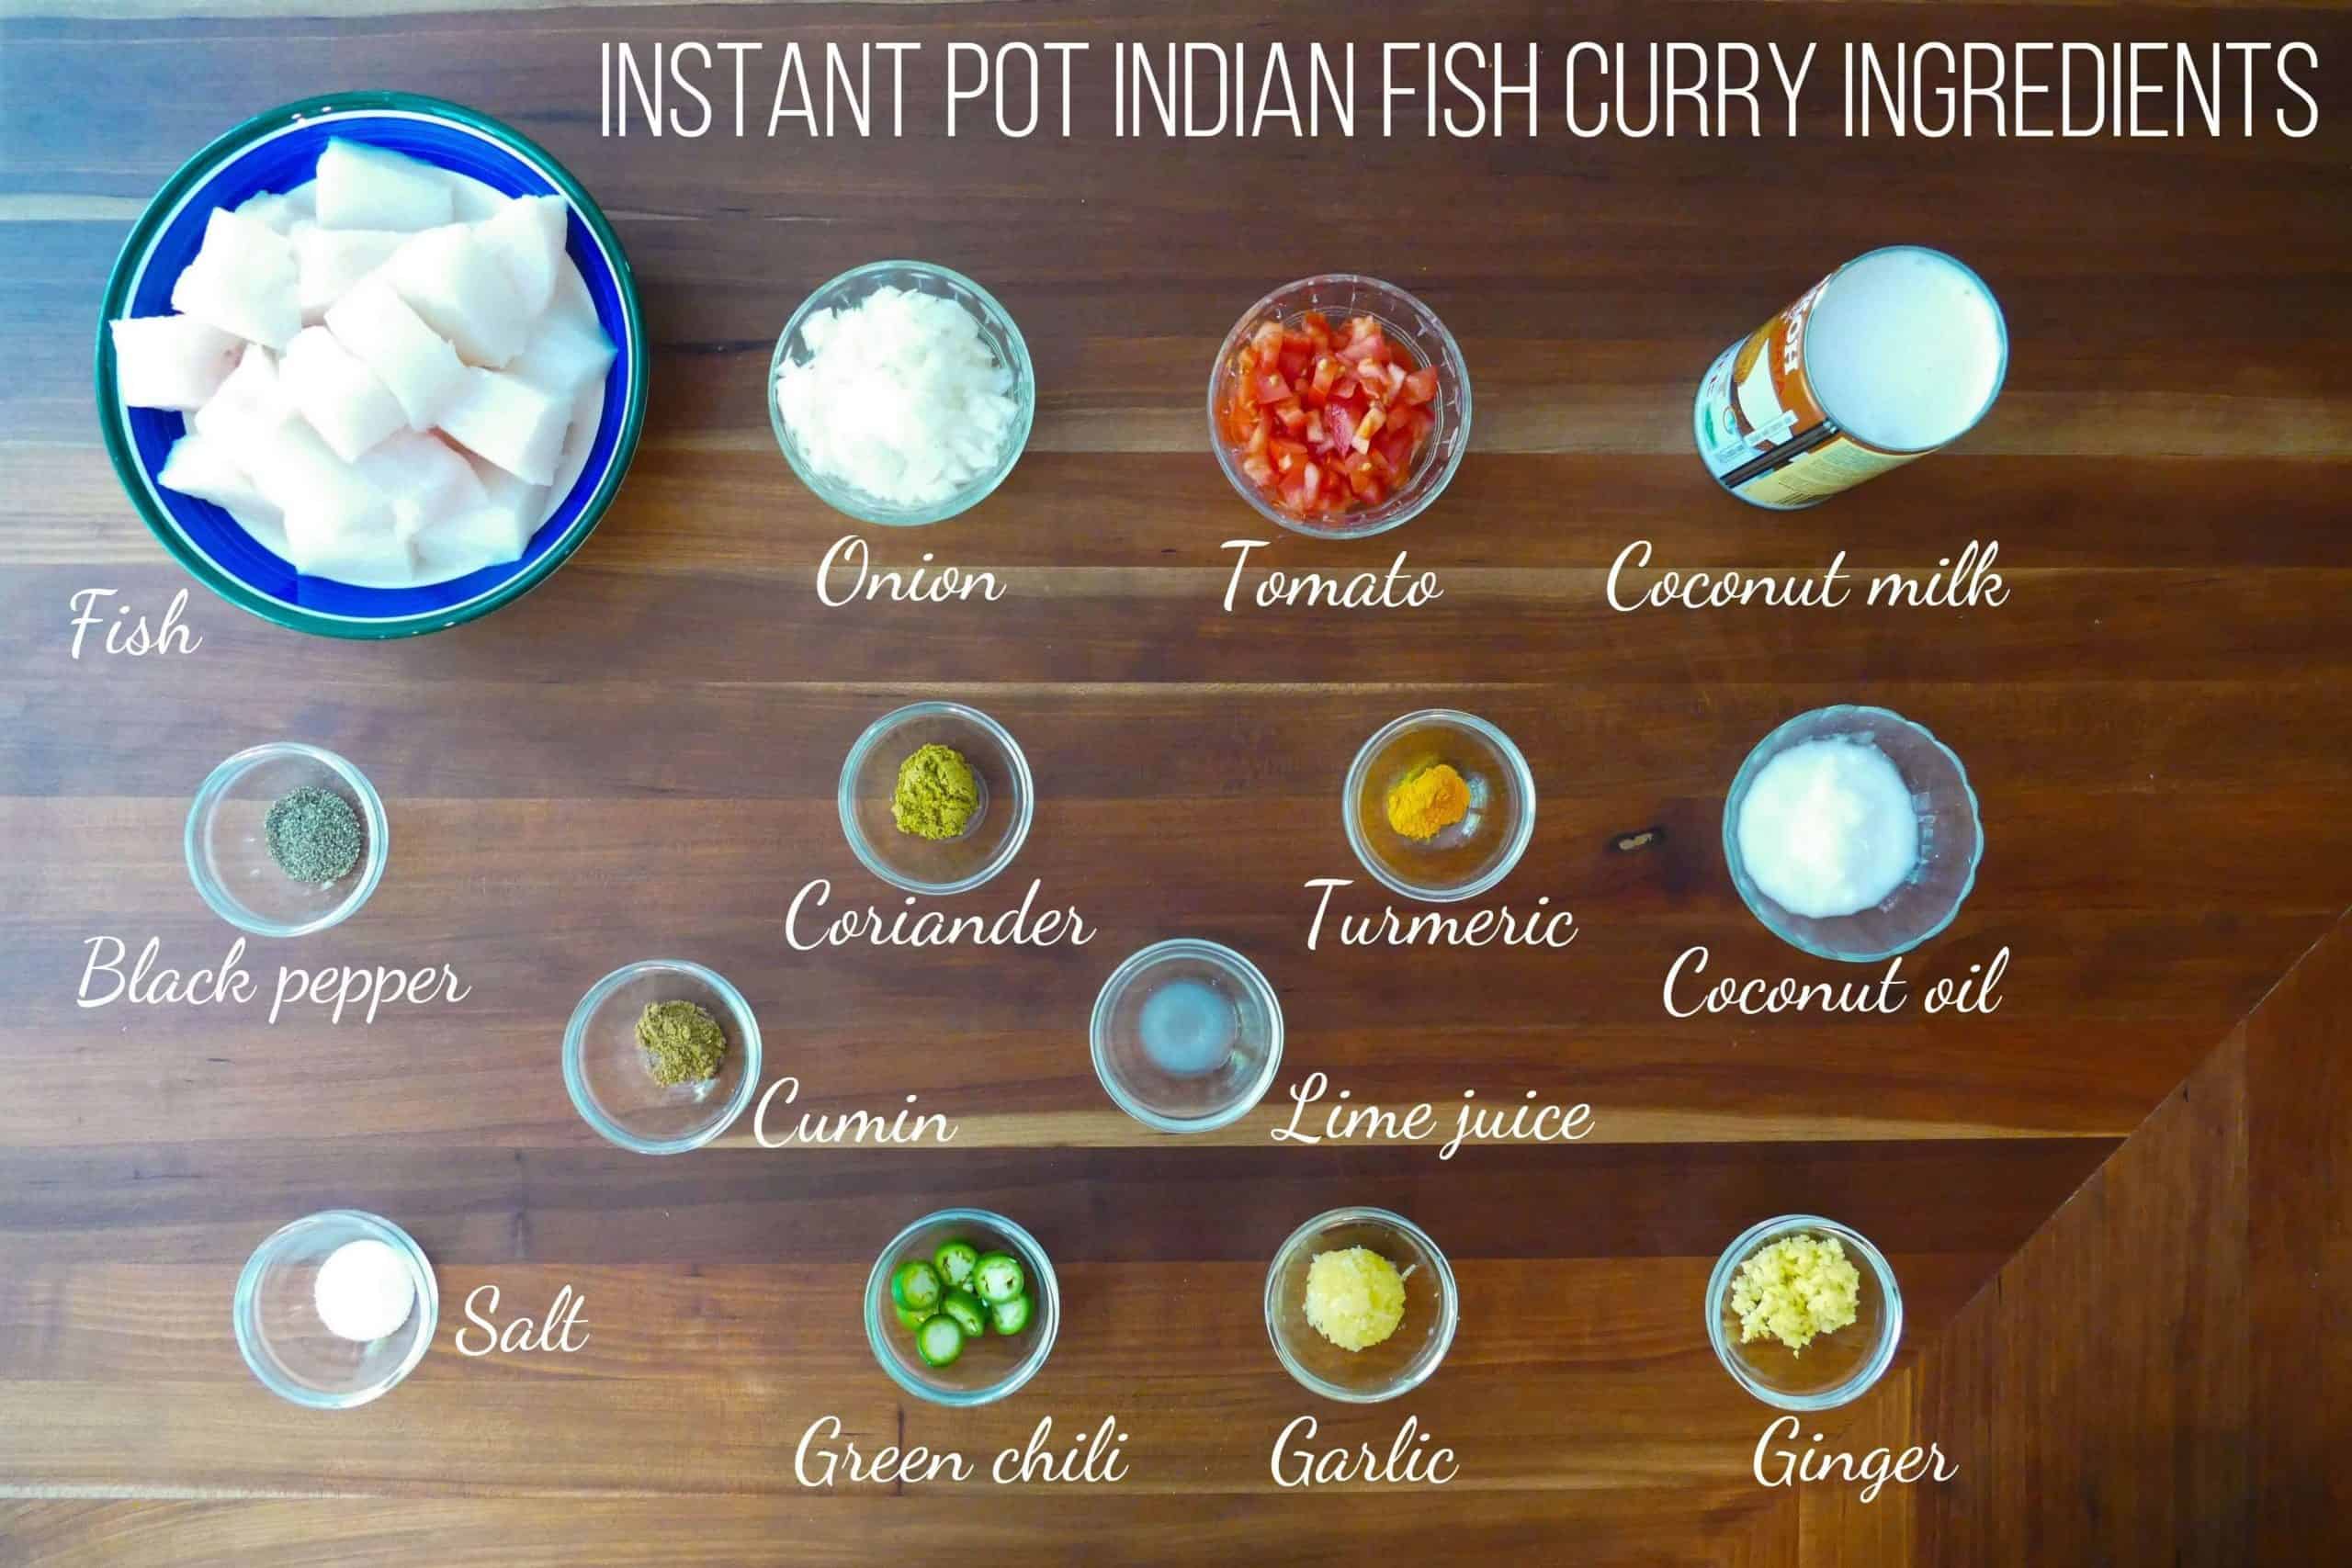 Instant Pot Indian Fish Curry Ingredients - fish, onion, tomato, coconut milk, black pepper, coriander, turmeric, coconut oil, cumin, lime juice, salt, green chili, garlic, ginger